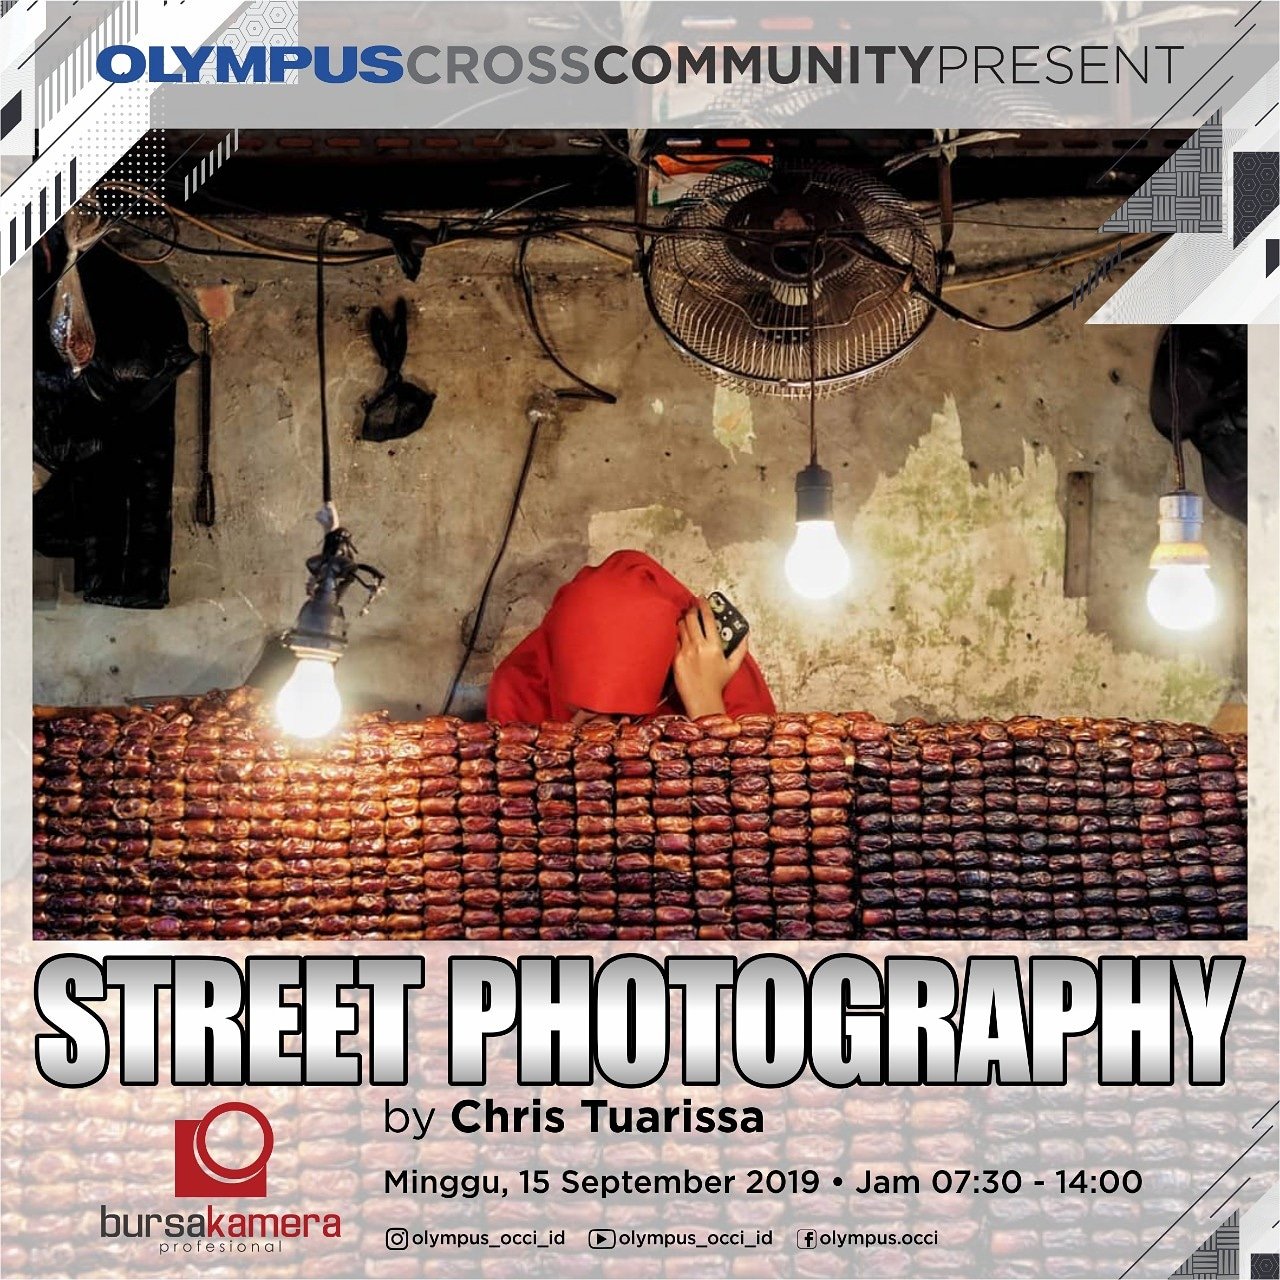  Street Photography Workshop with @chris_tuarissa